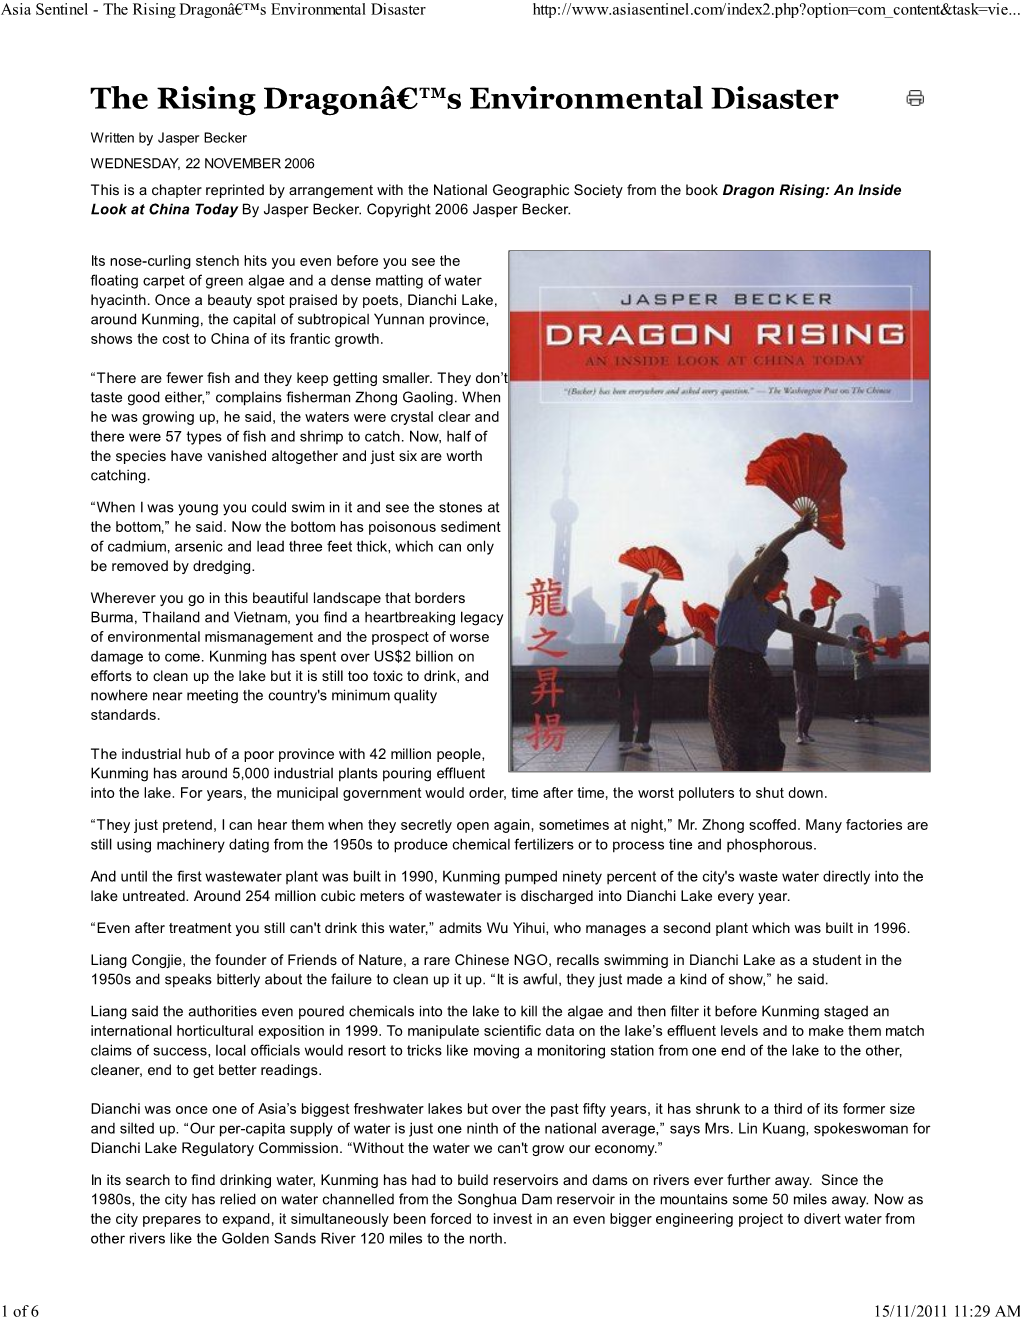 The Rising Dragonâ€™S Environmental Disaster